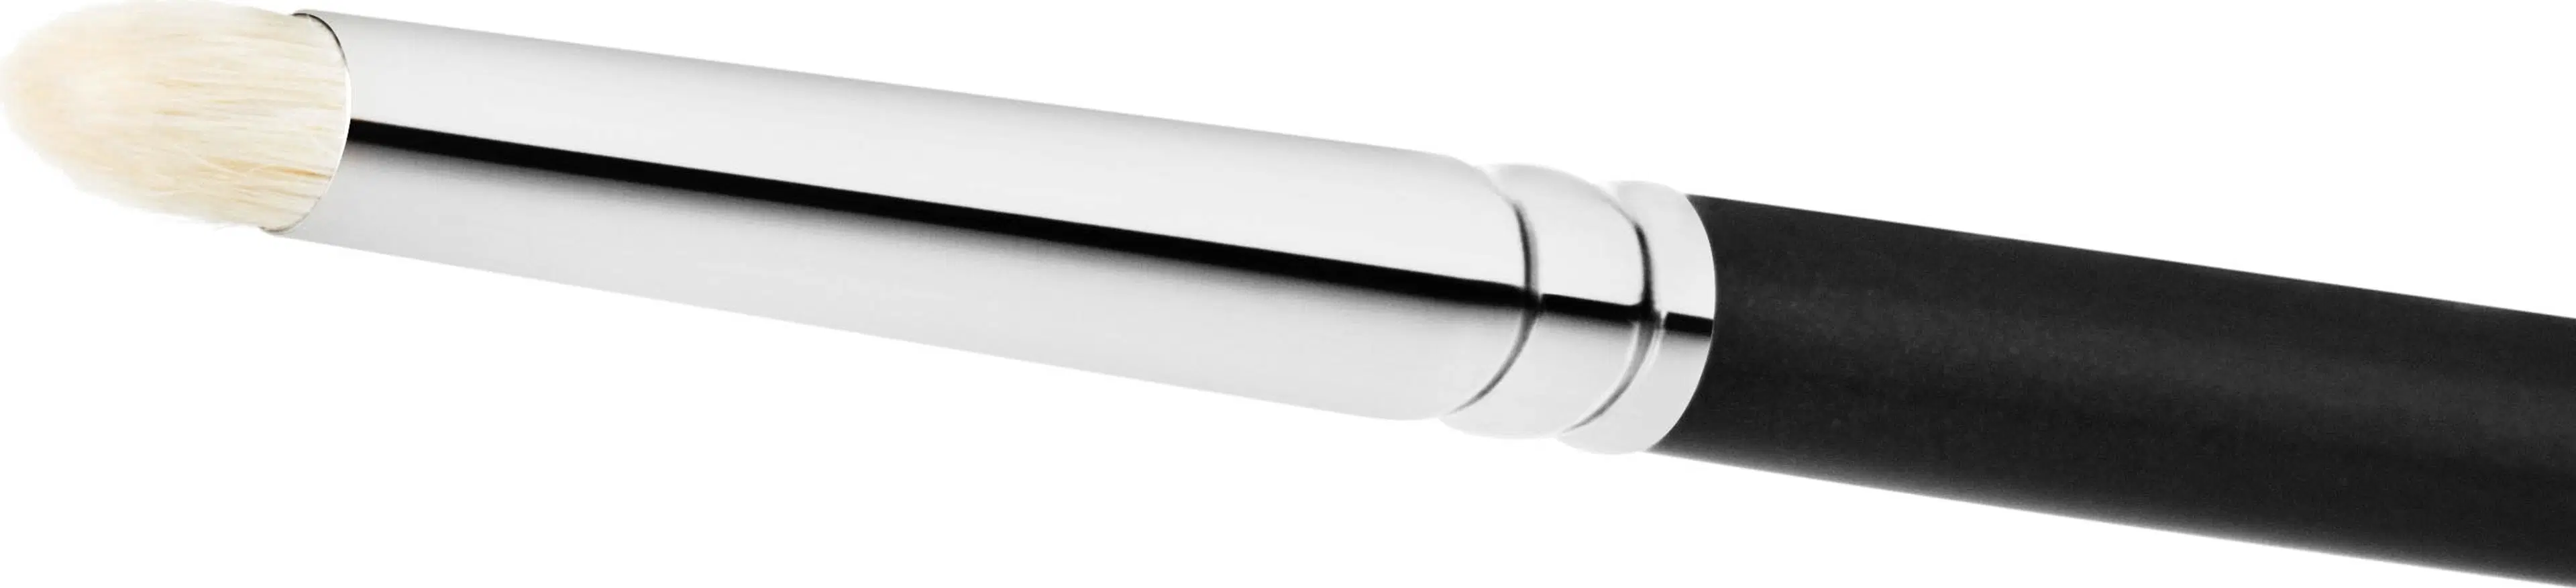 MAC Pencil Brush 219s sivellin